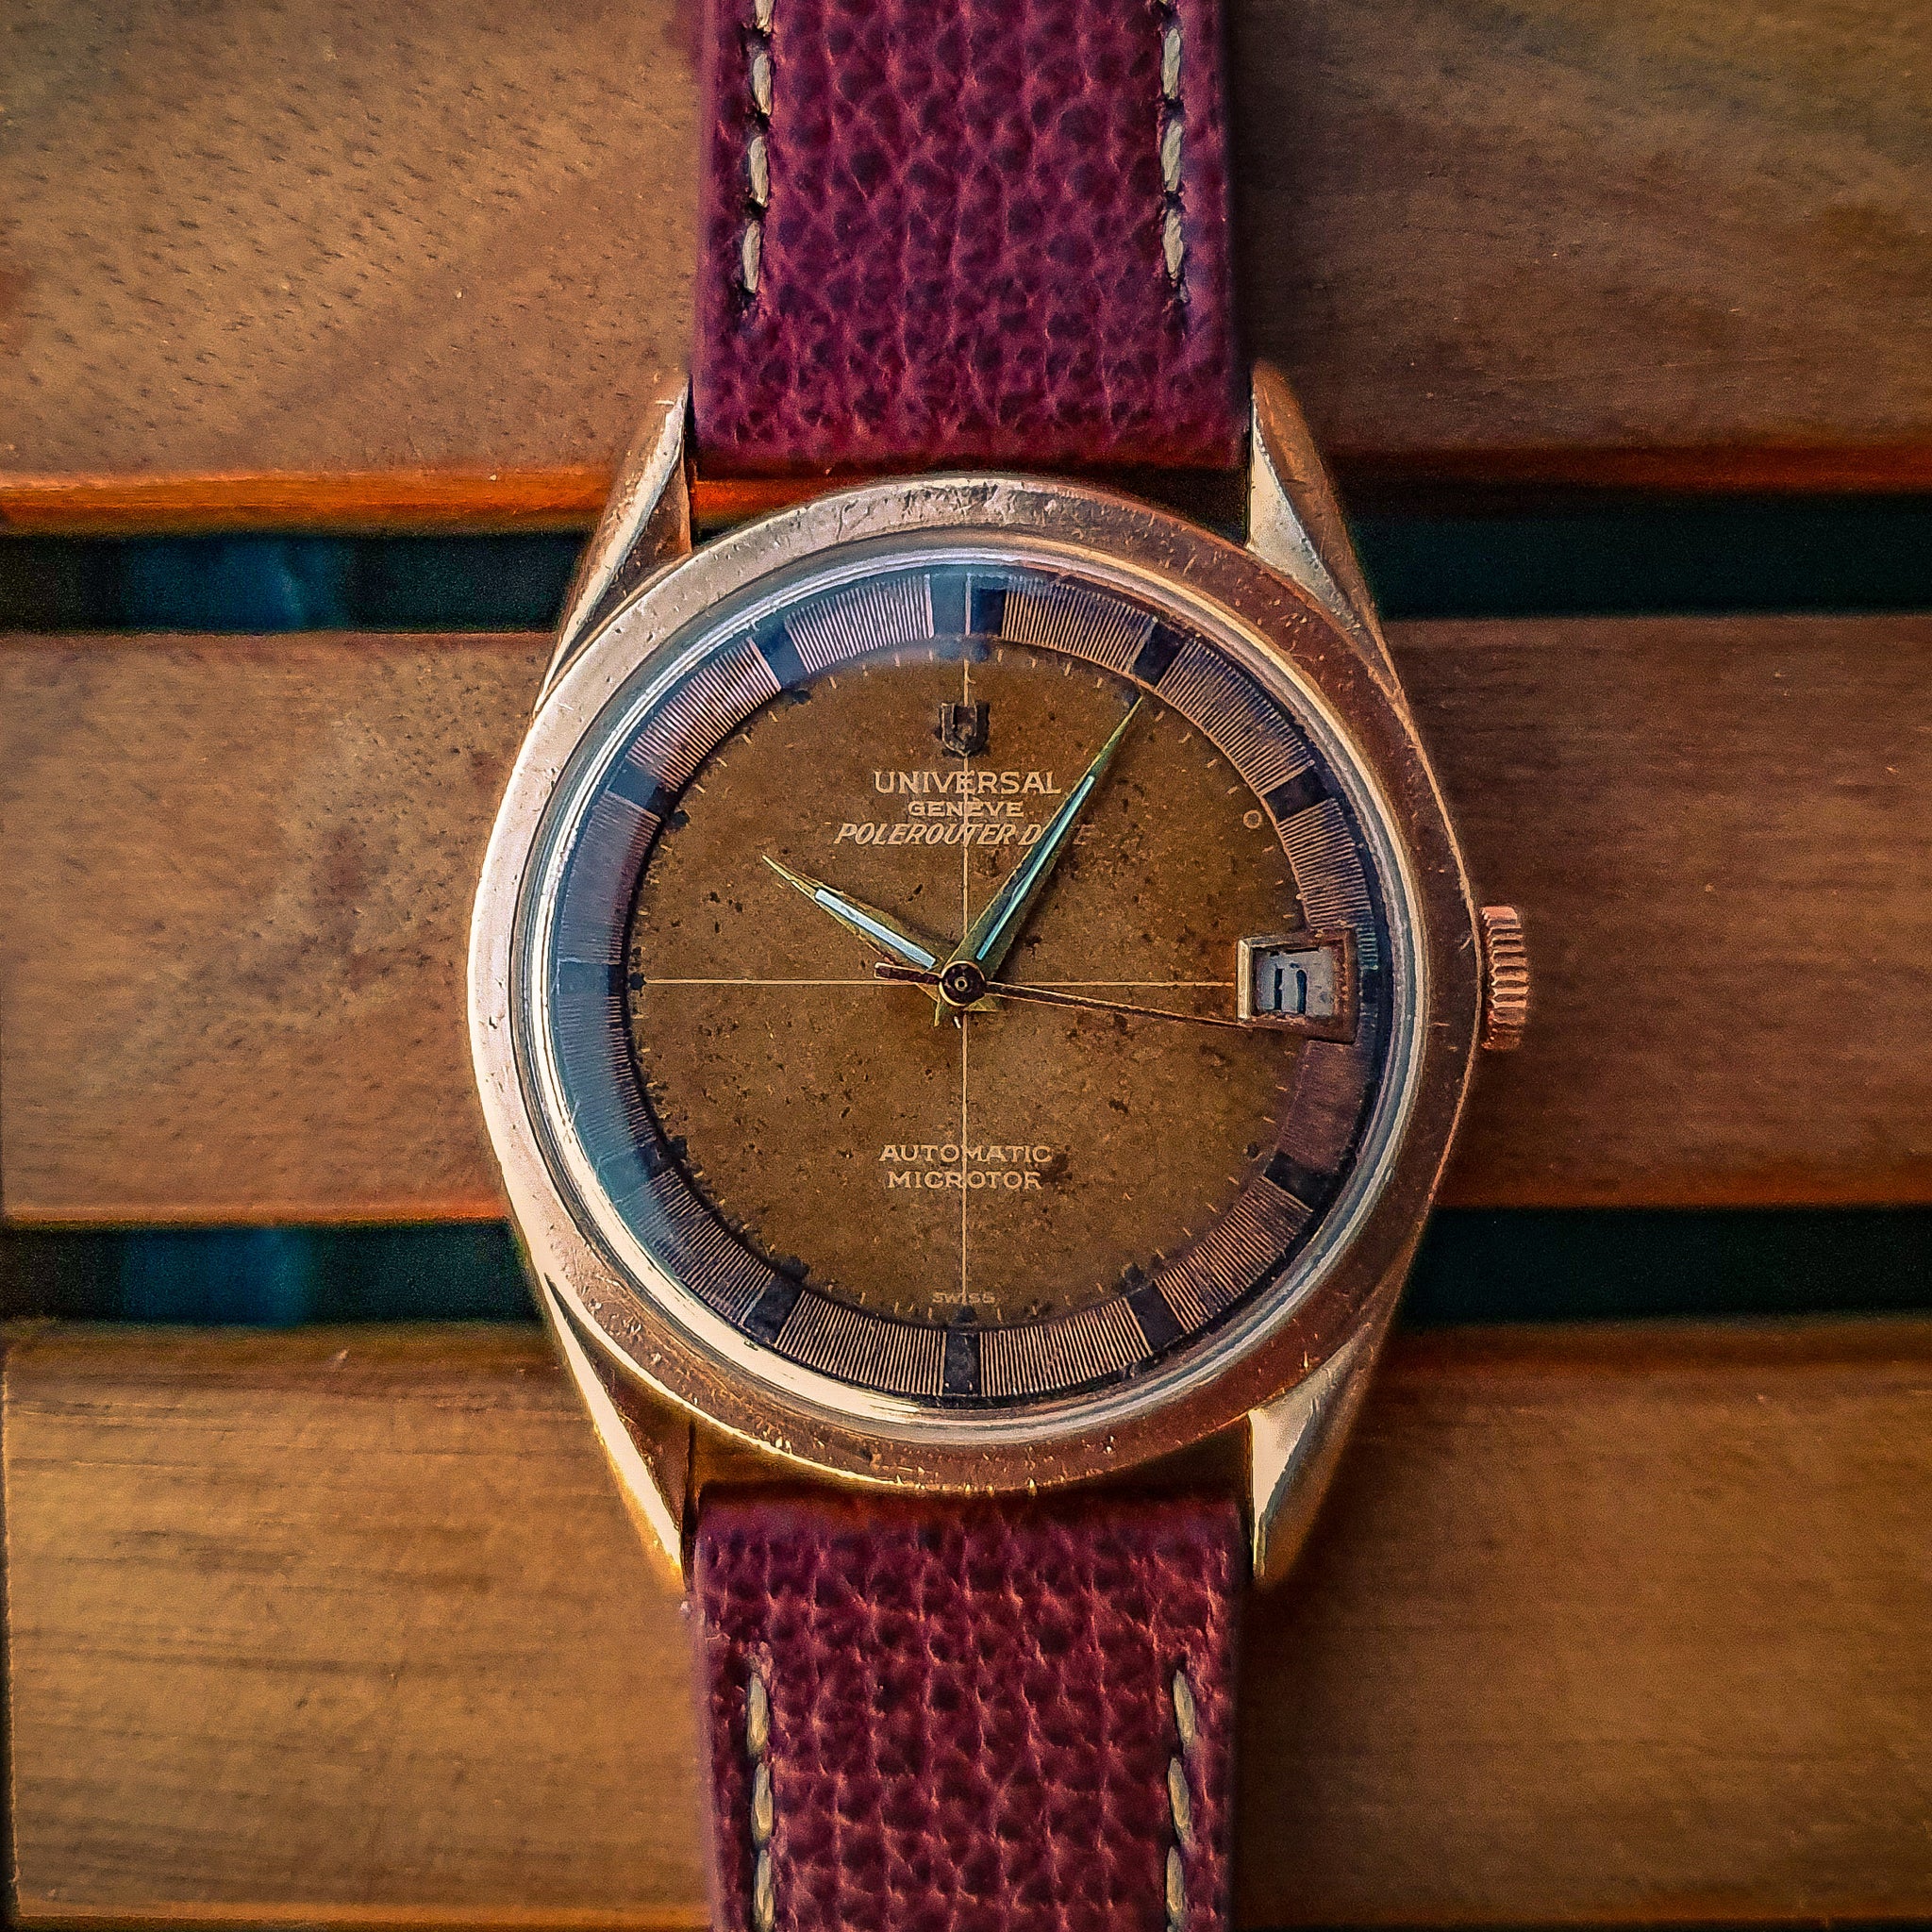 reloj vario italiano correa de cuero universal geneve vintage